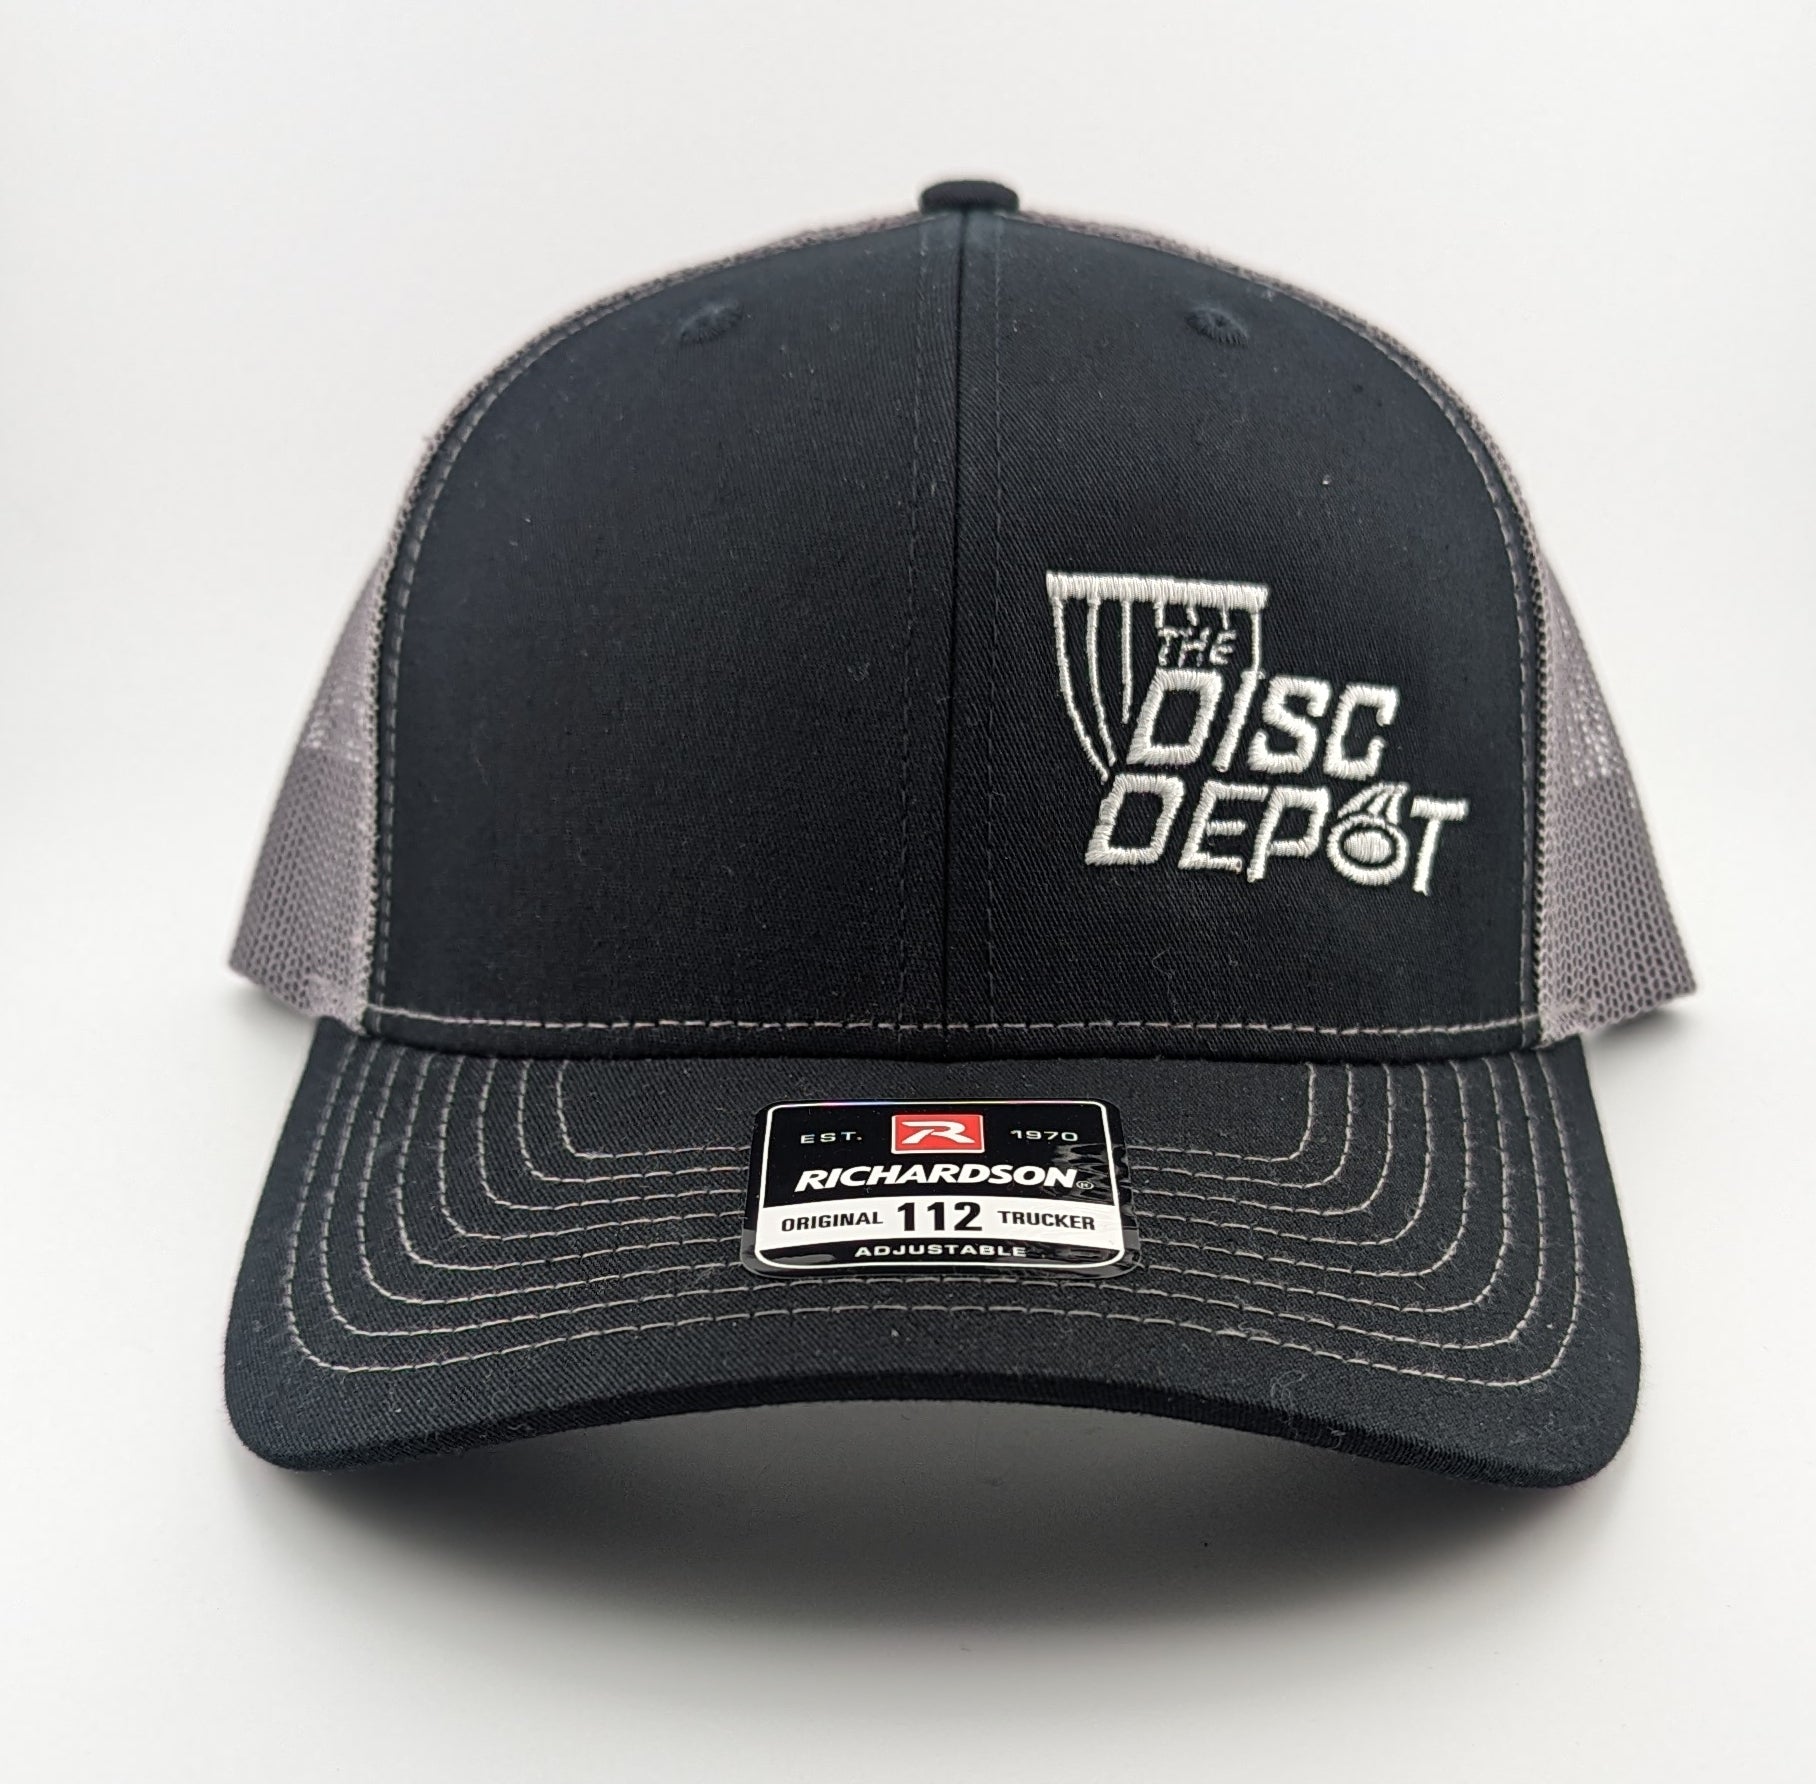 Buy dark-grey-black-white-logo The Disc Depot Richardson 112 Trucker Hat